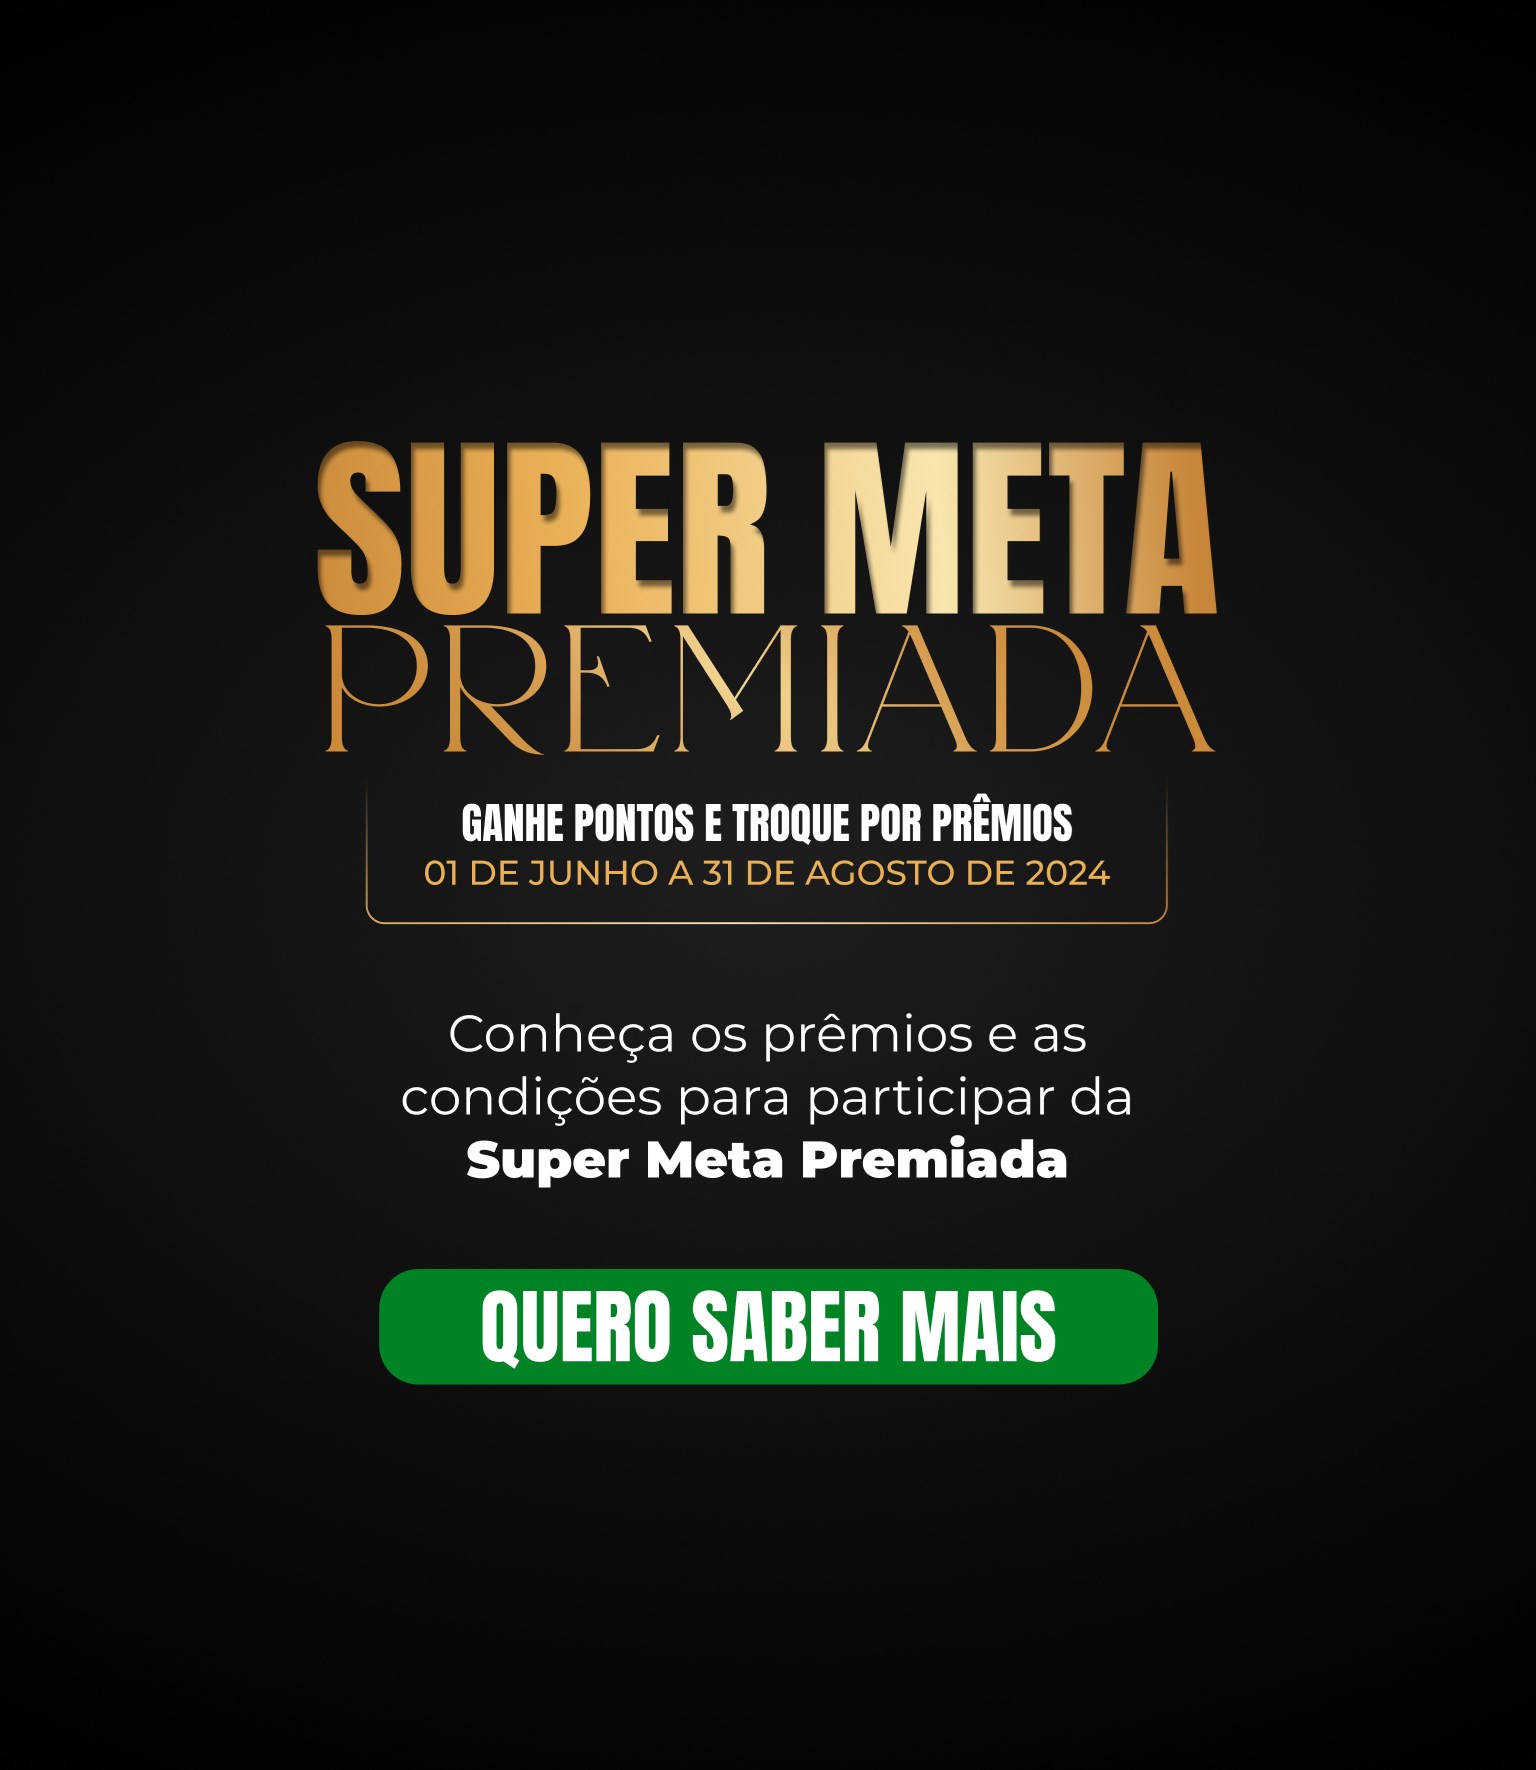 Super Meta Premiada!